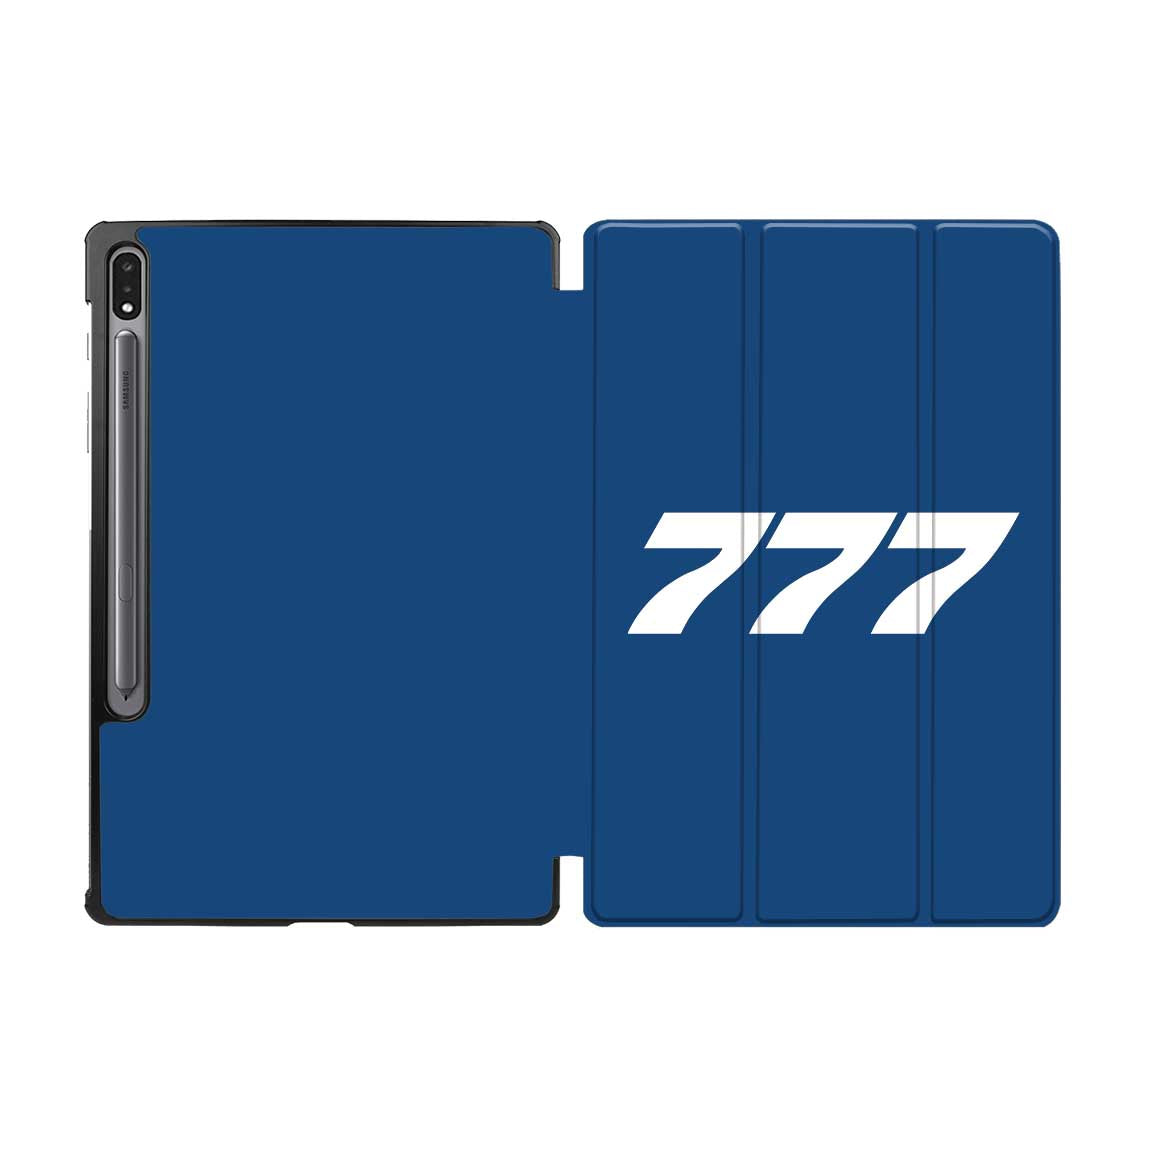 777 Flat Text Designed Samsung Tablet Cases